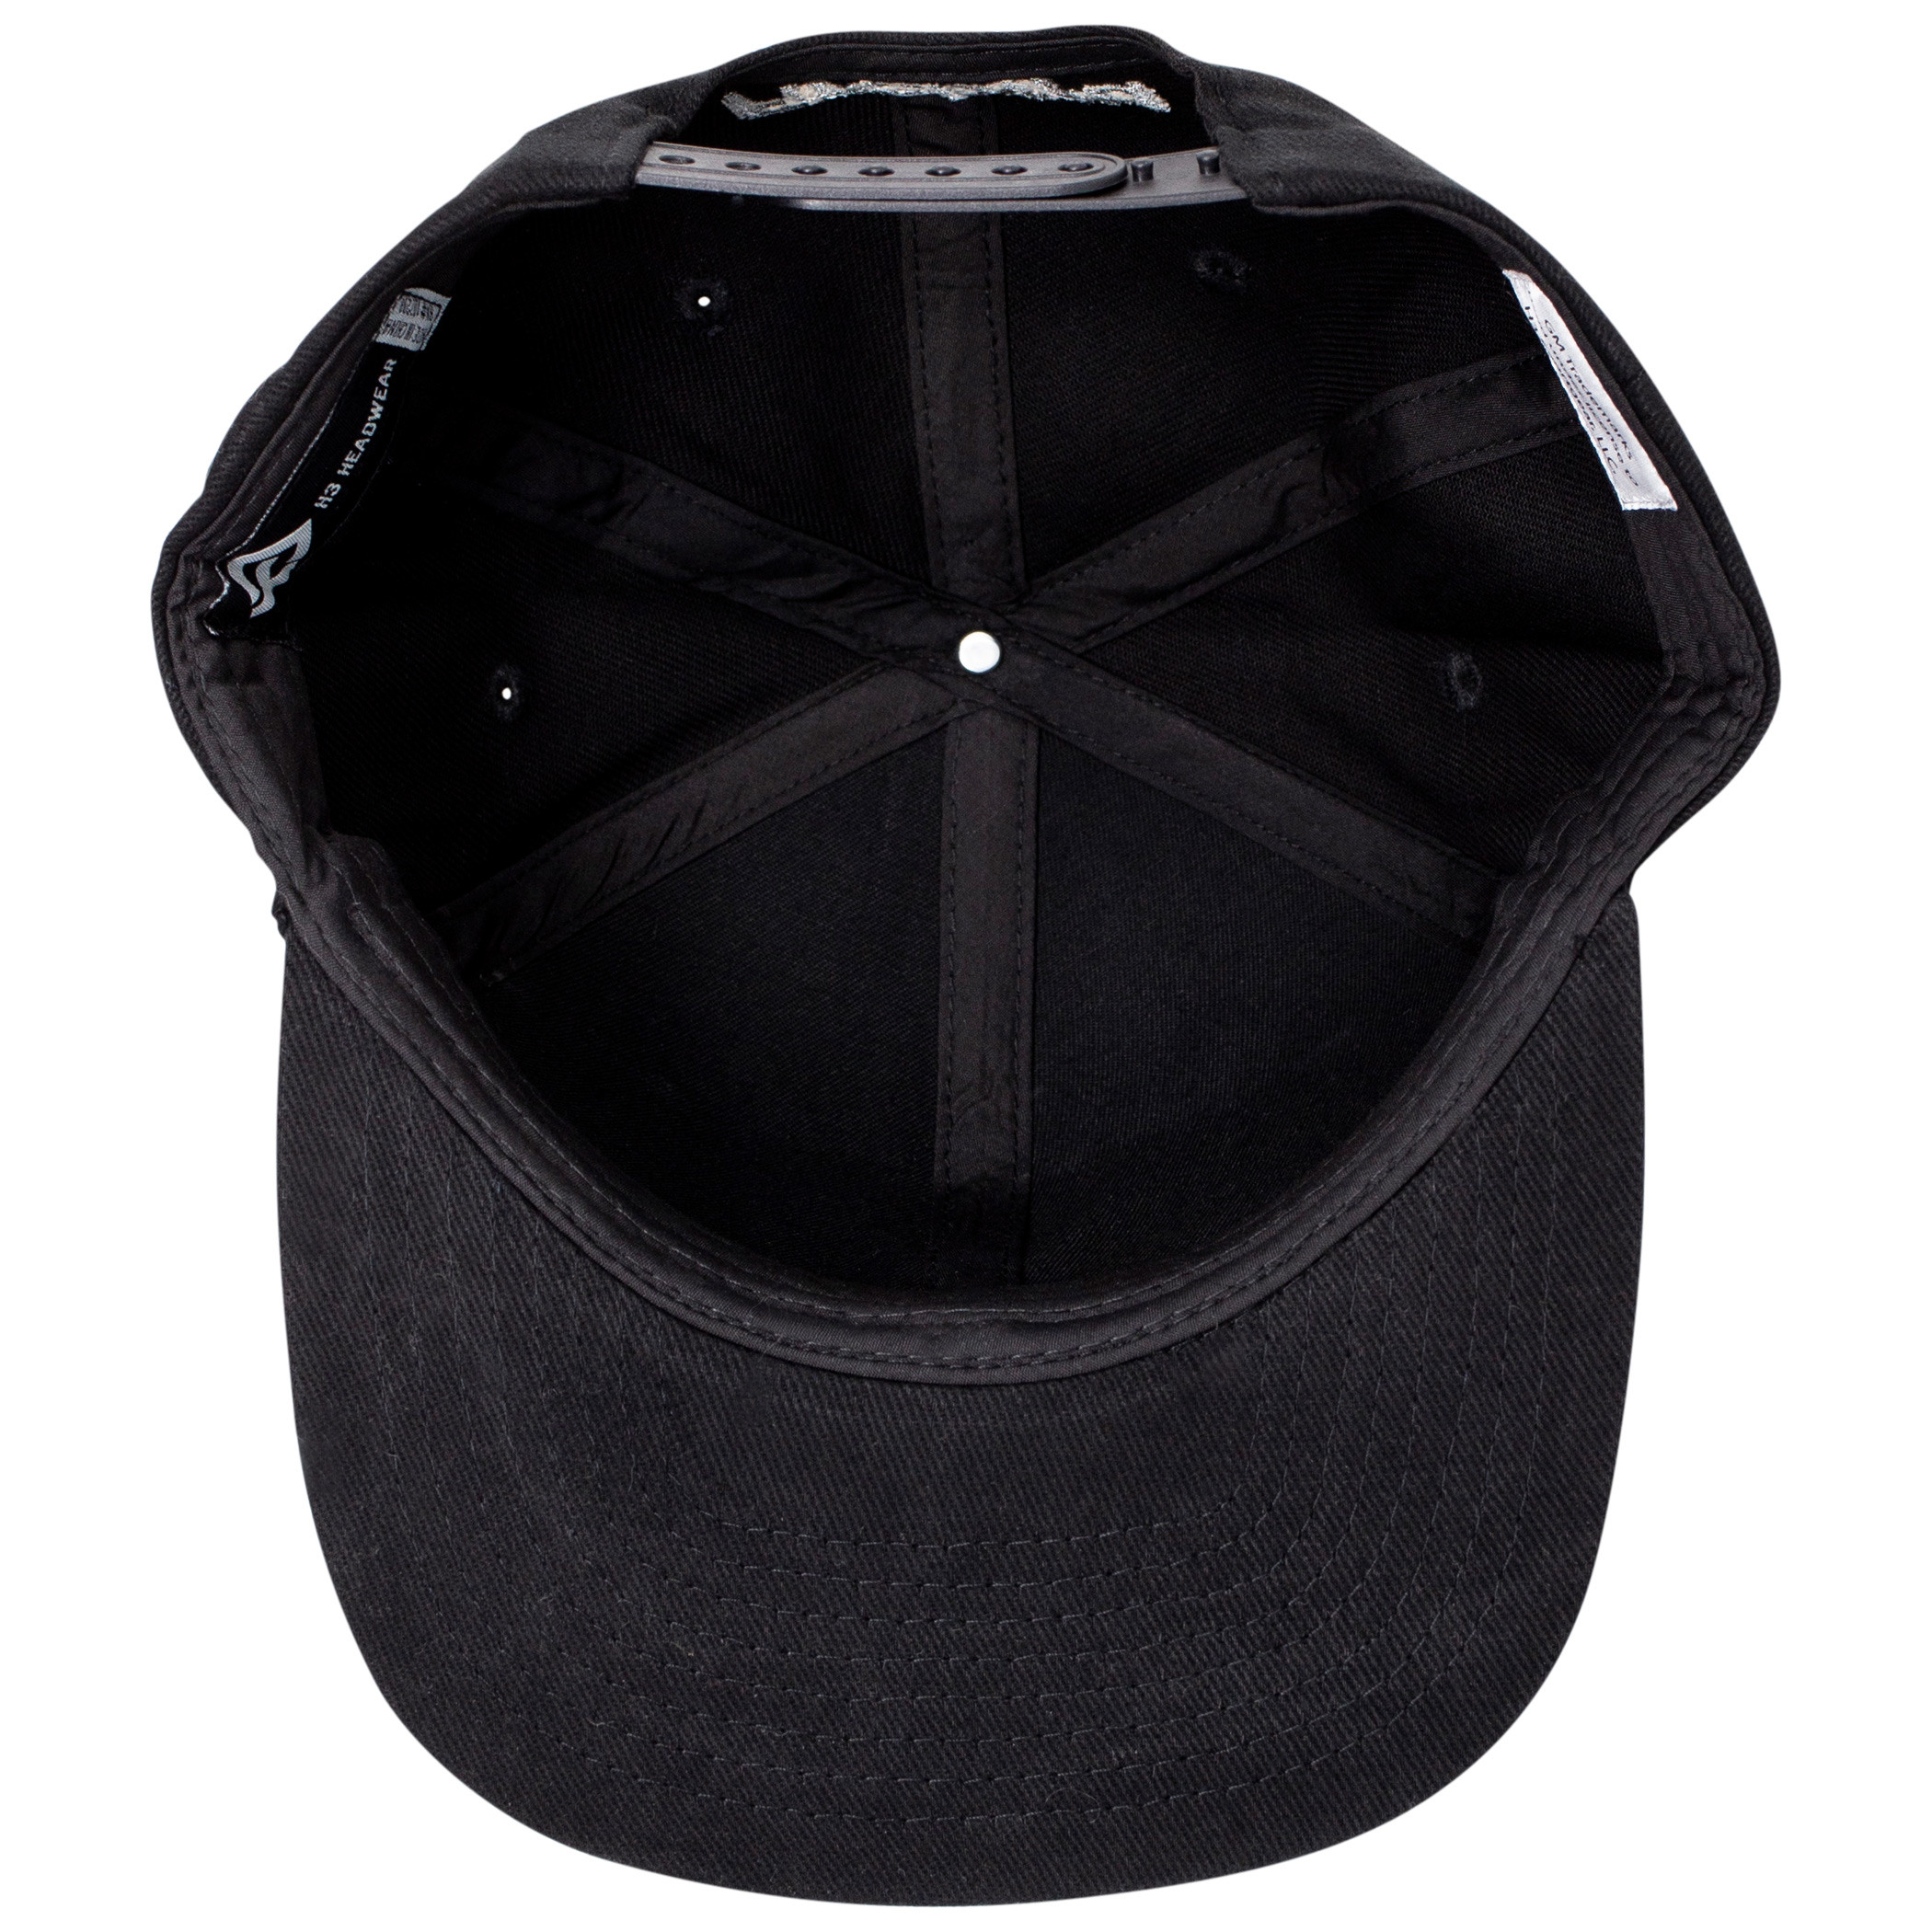 Pontiac Metal Emblem Logo Snapback Hat